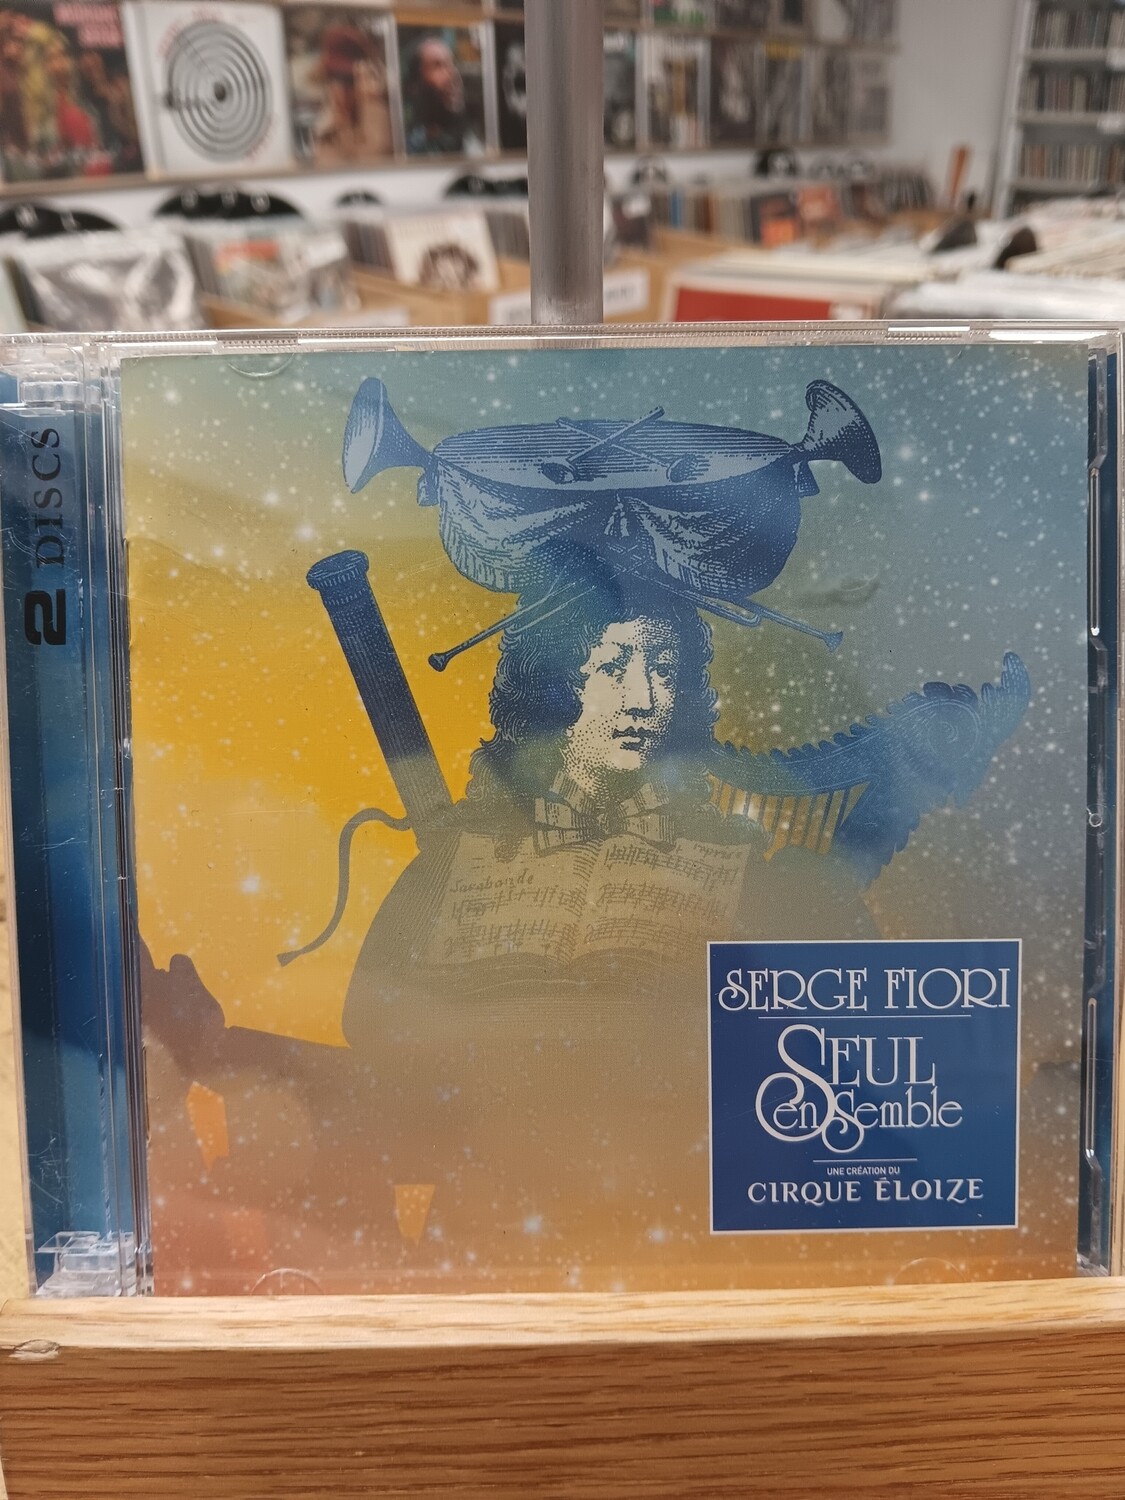 SERGE FIORI - Seul Ensemble (CD)